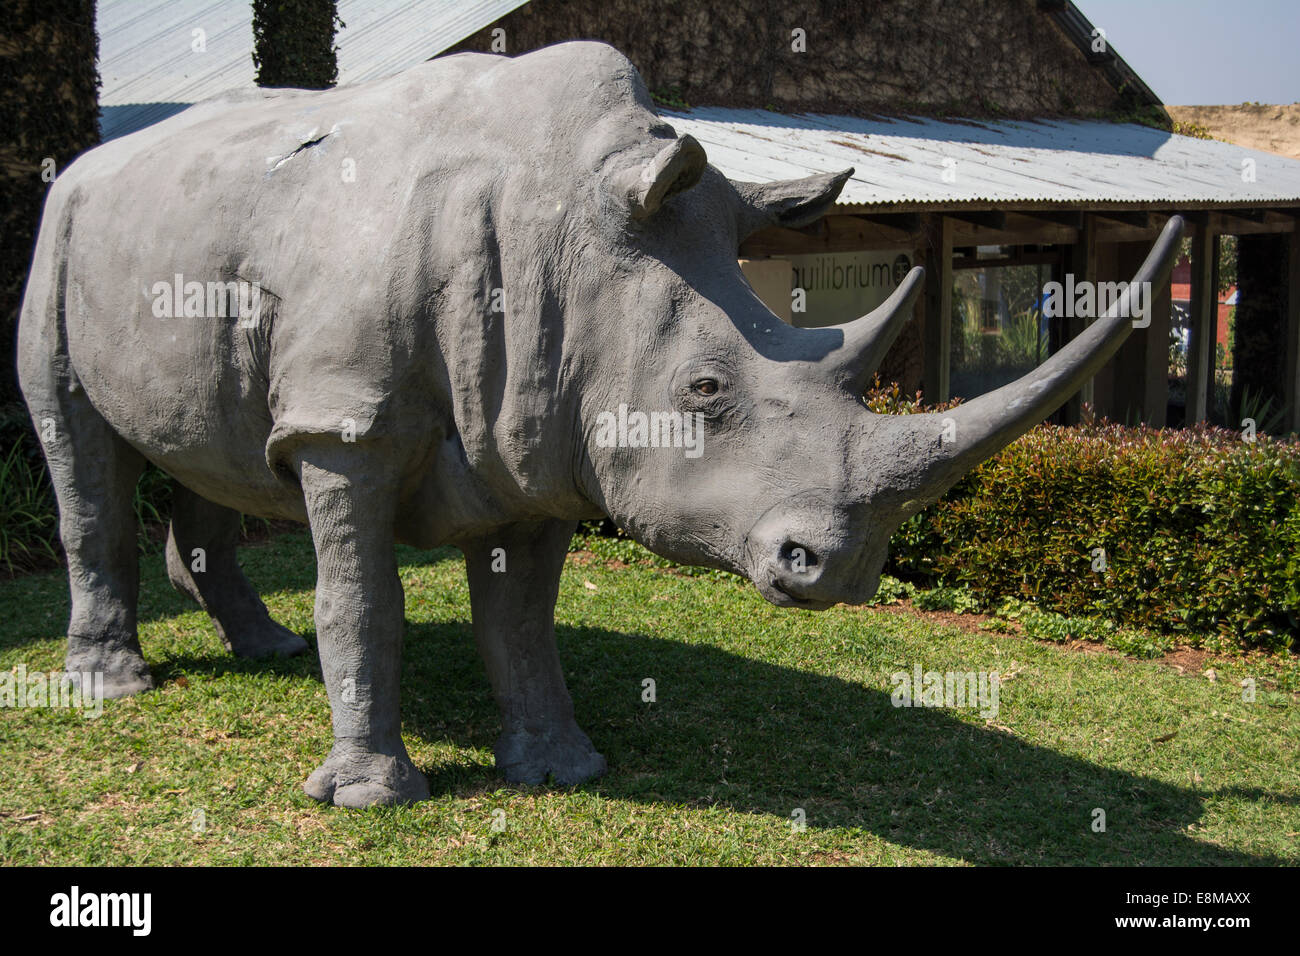 False rhino outside retail centre Stock Photo